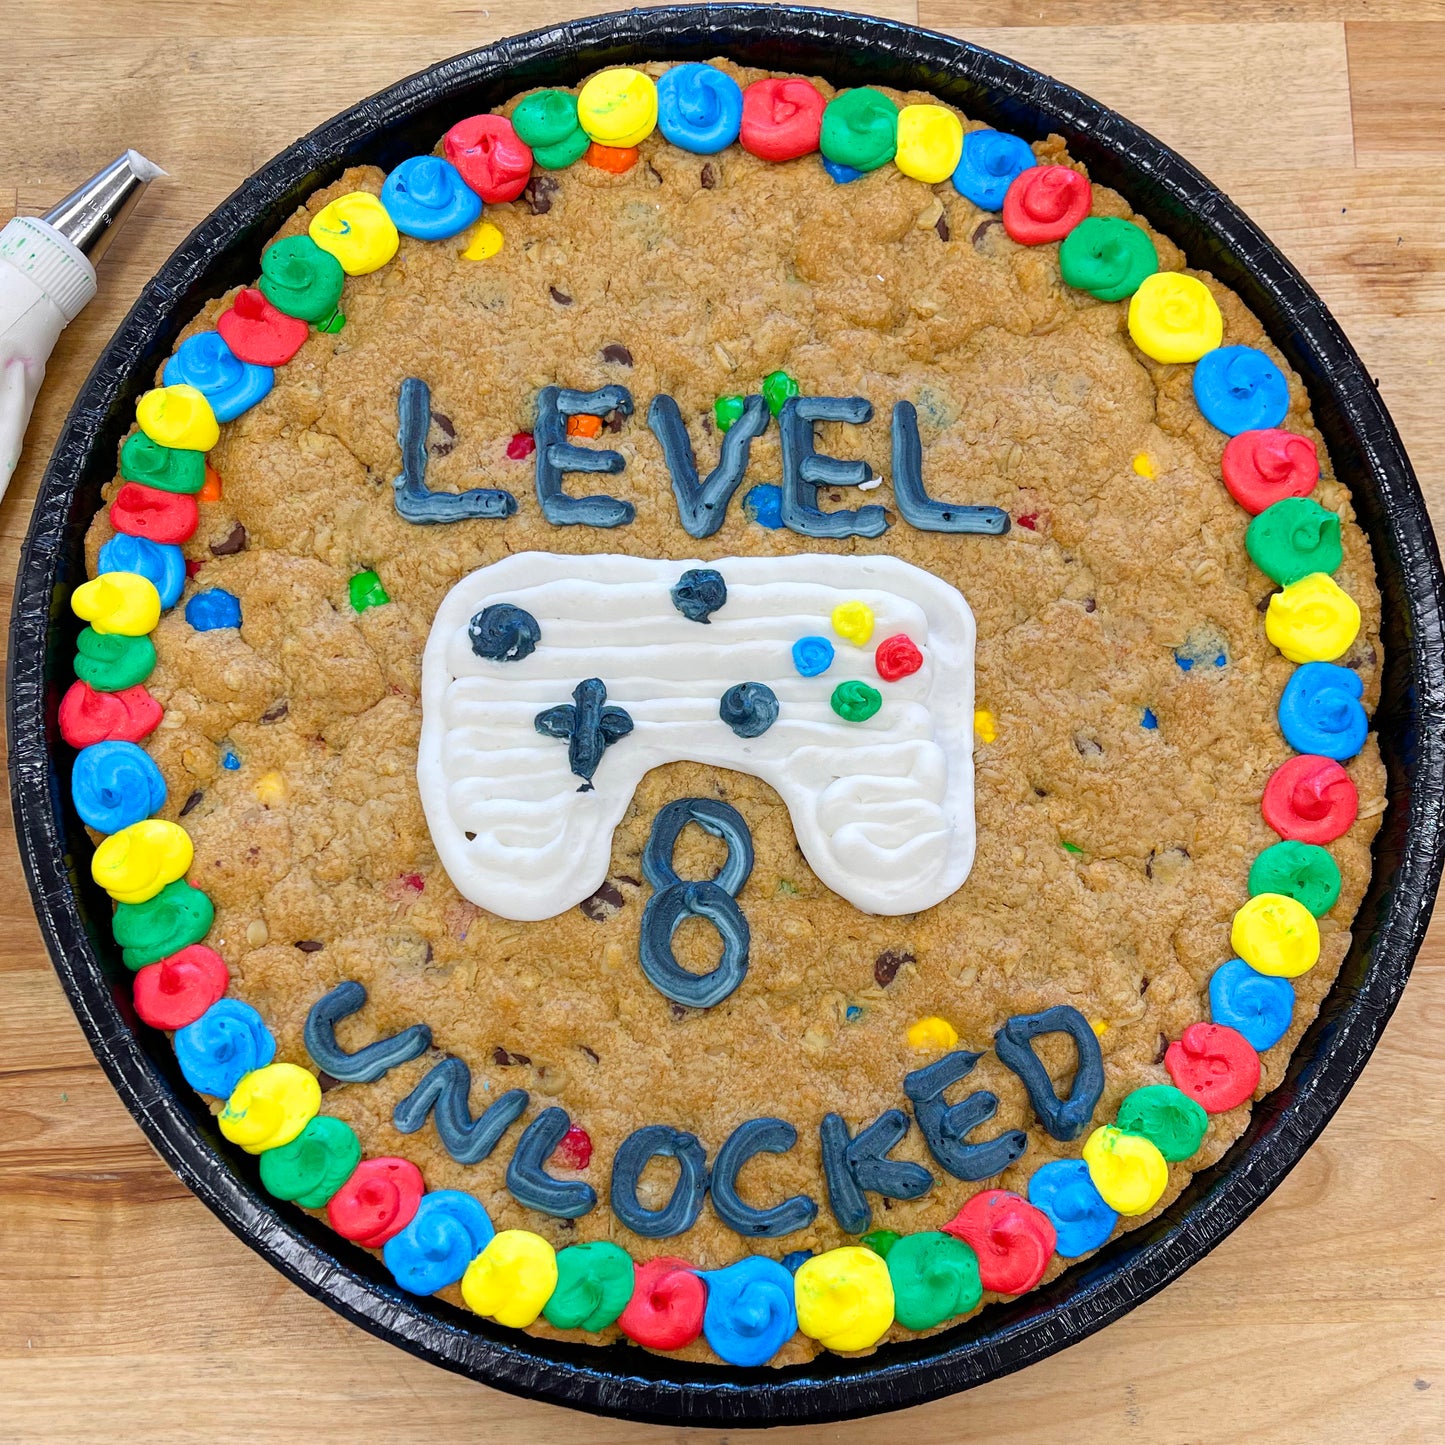 12" Celebration Cookie - Decorated